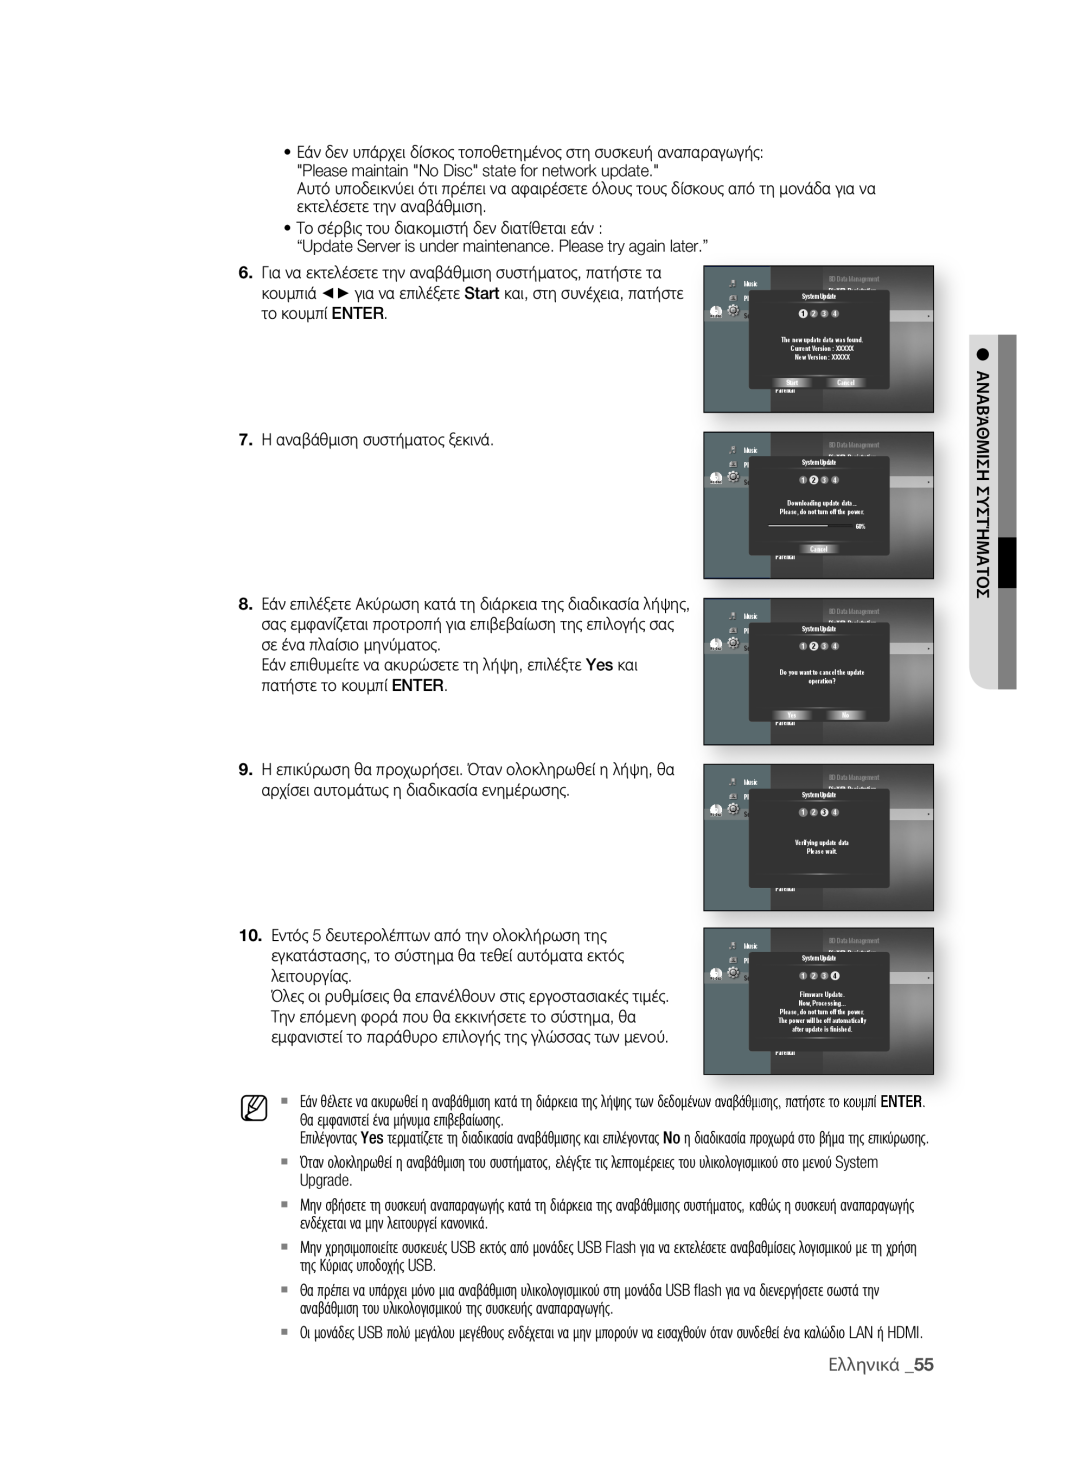 Samsung BD-P1580/EDC manual το κουμπί ENTER, σε ένα πλαίσιο μηνύματος, Ελληνικά  